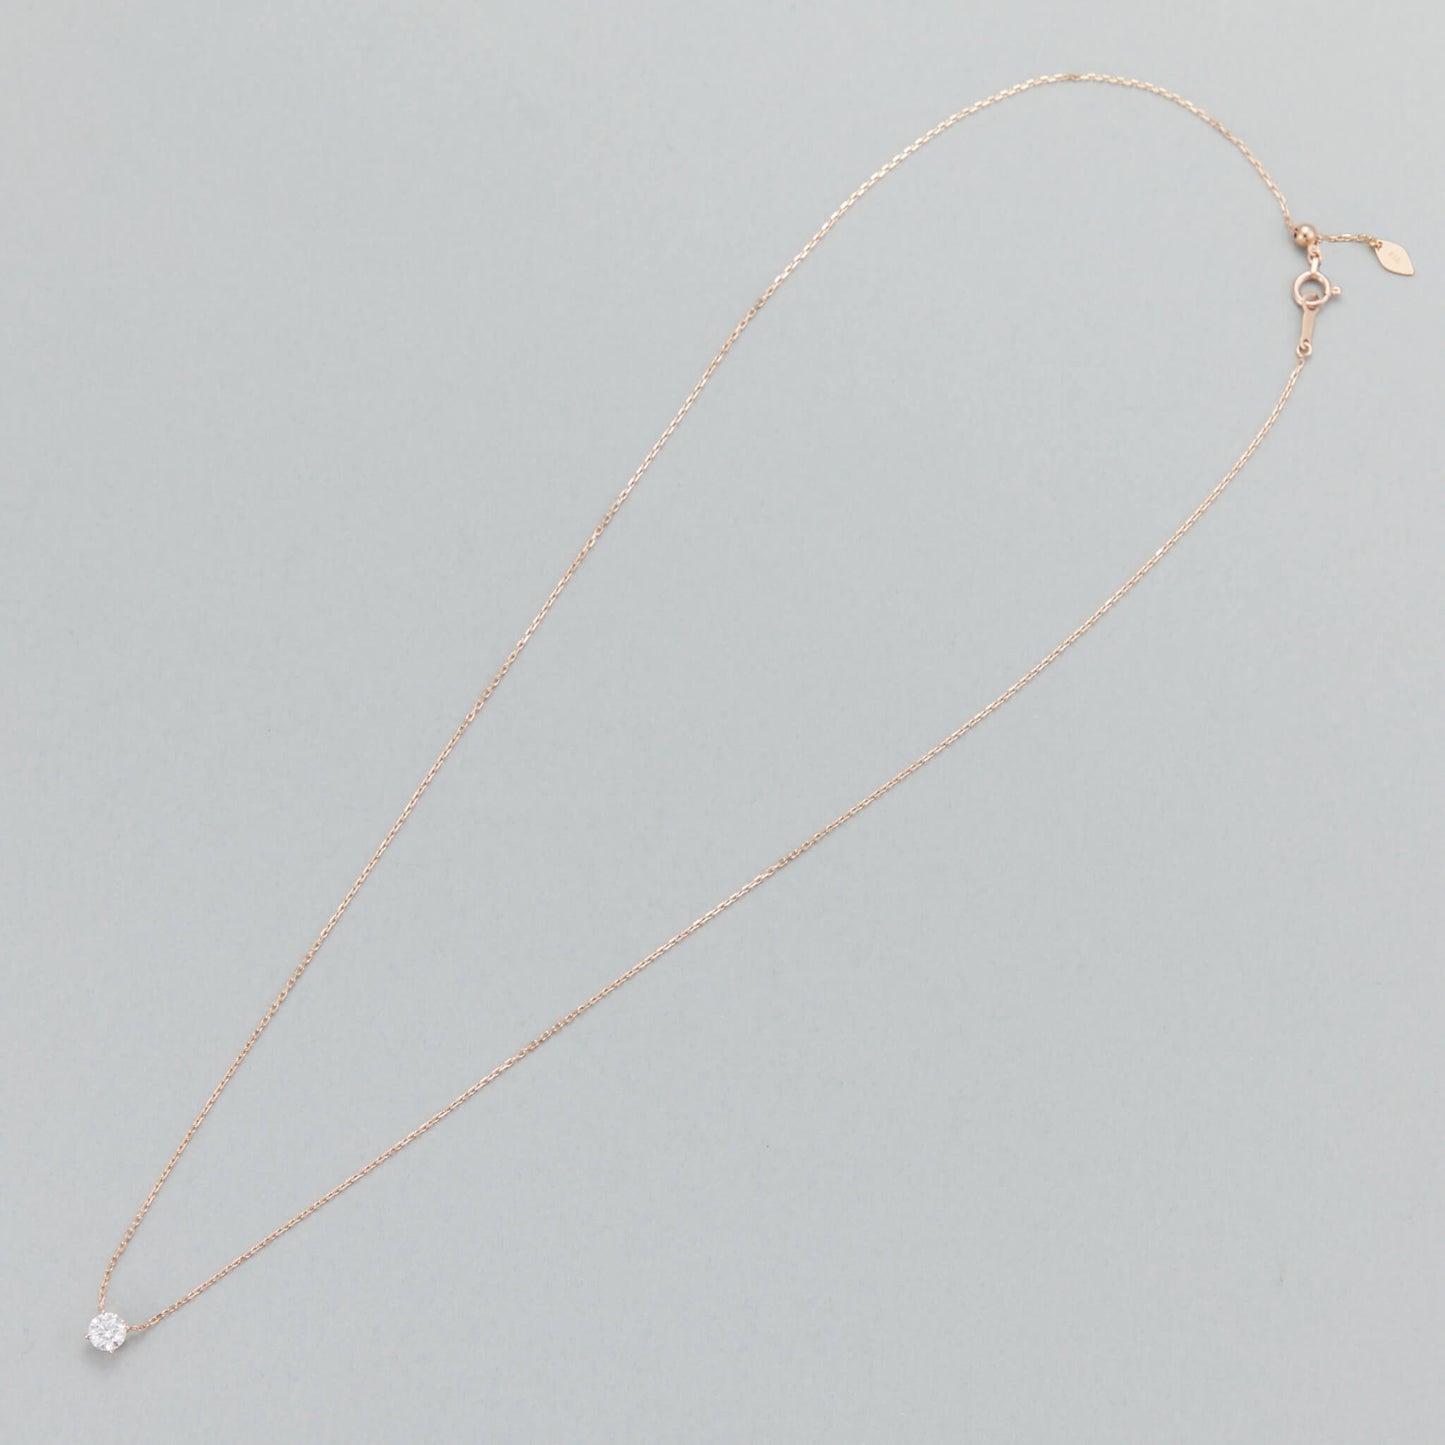 HA SIMPLY Necklace / K18 Pink Gold / 0.3 Carat